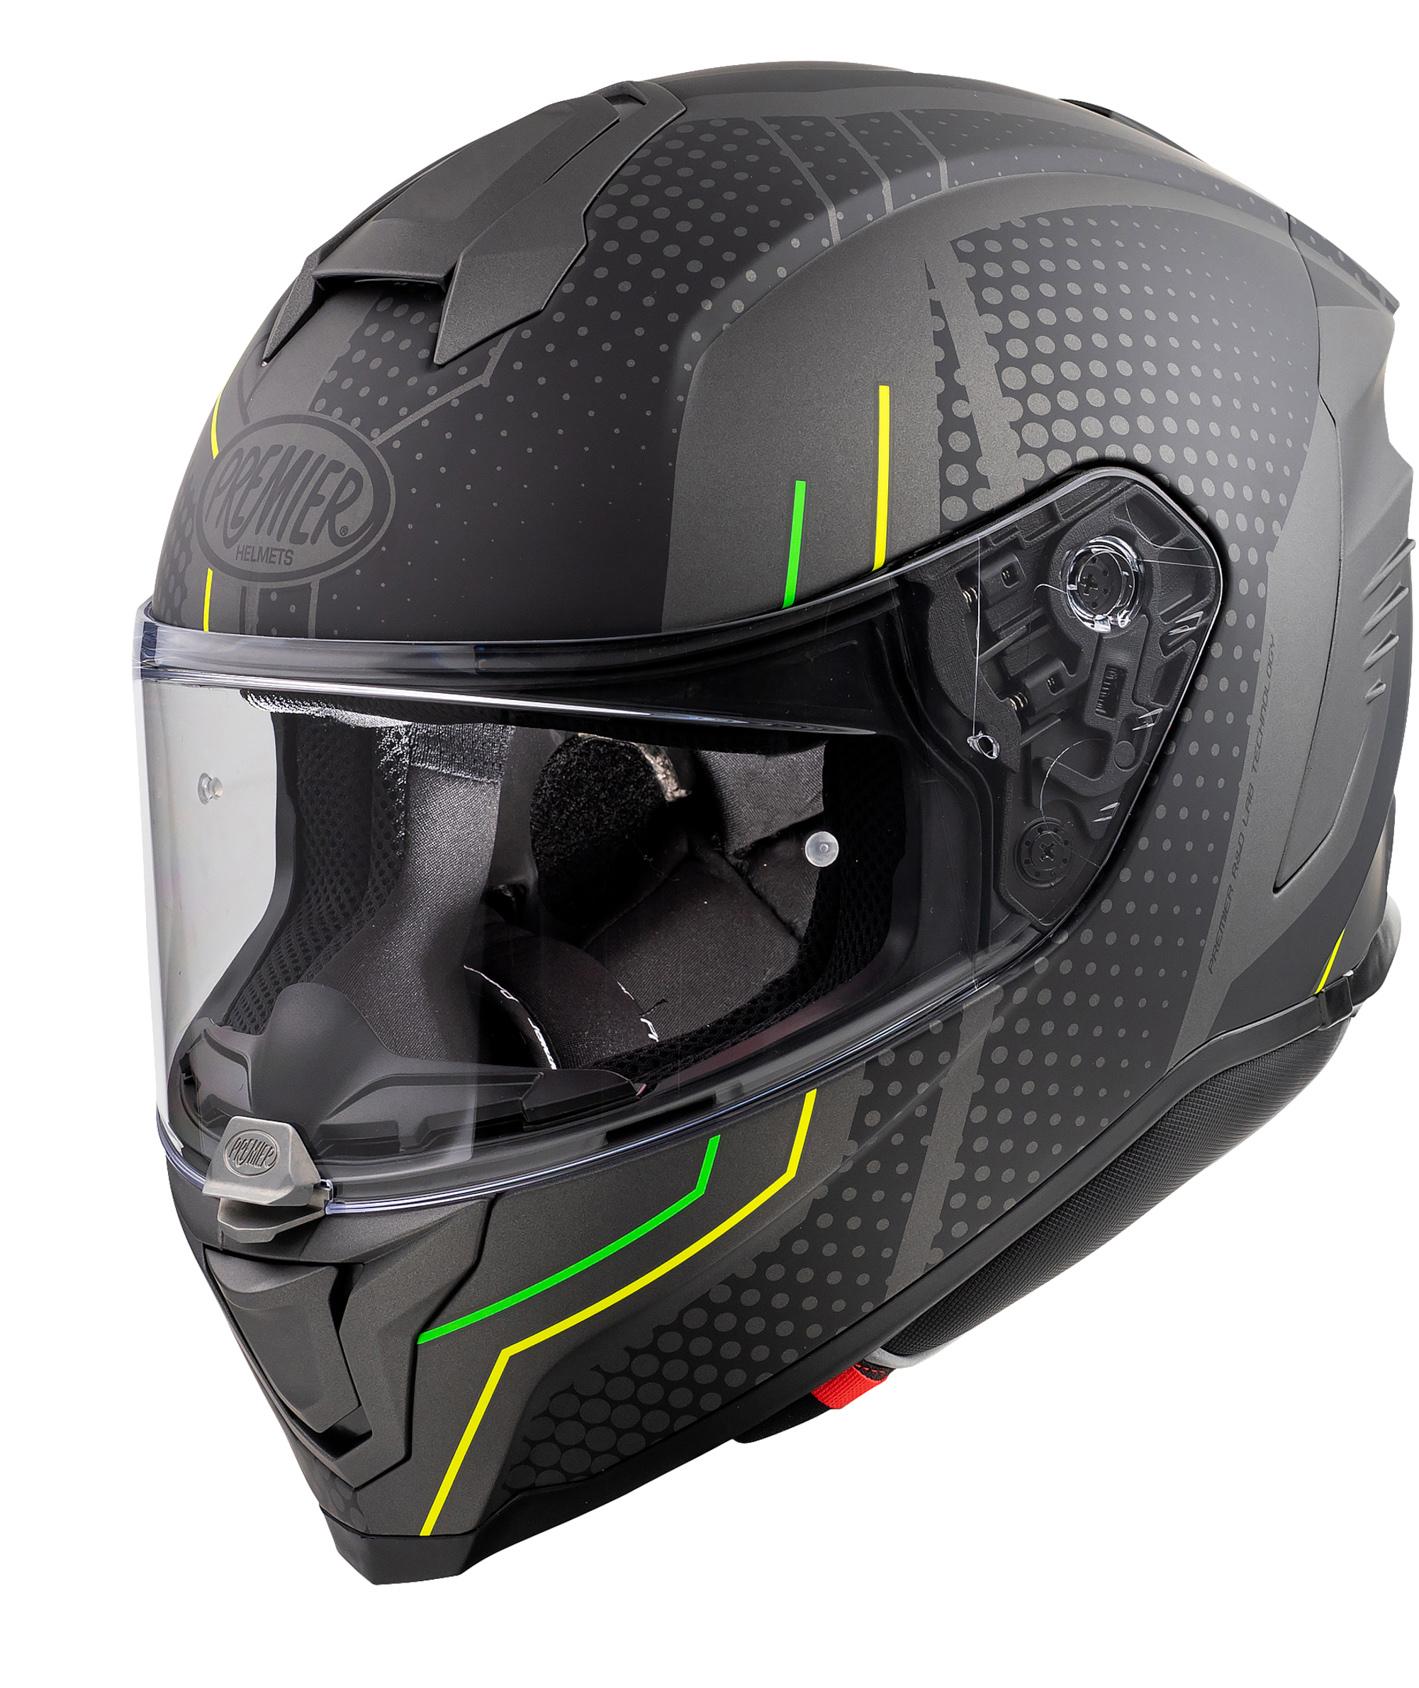 Premier Hyper Bp Full Face Motorcycle Helmet - Black/Gunmetal, L